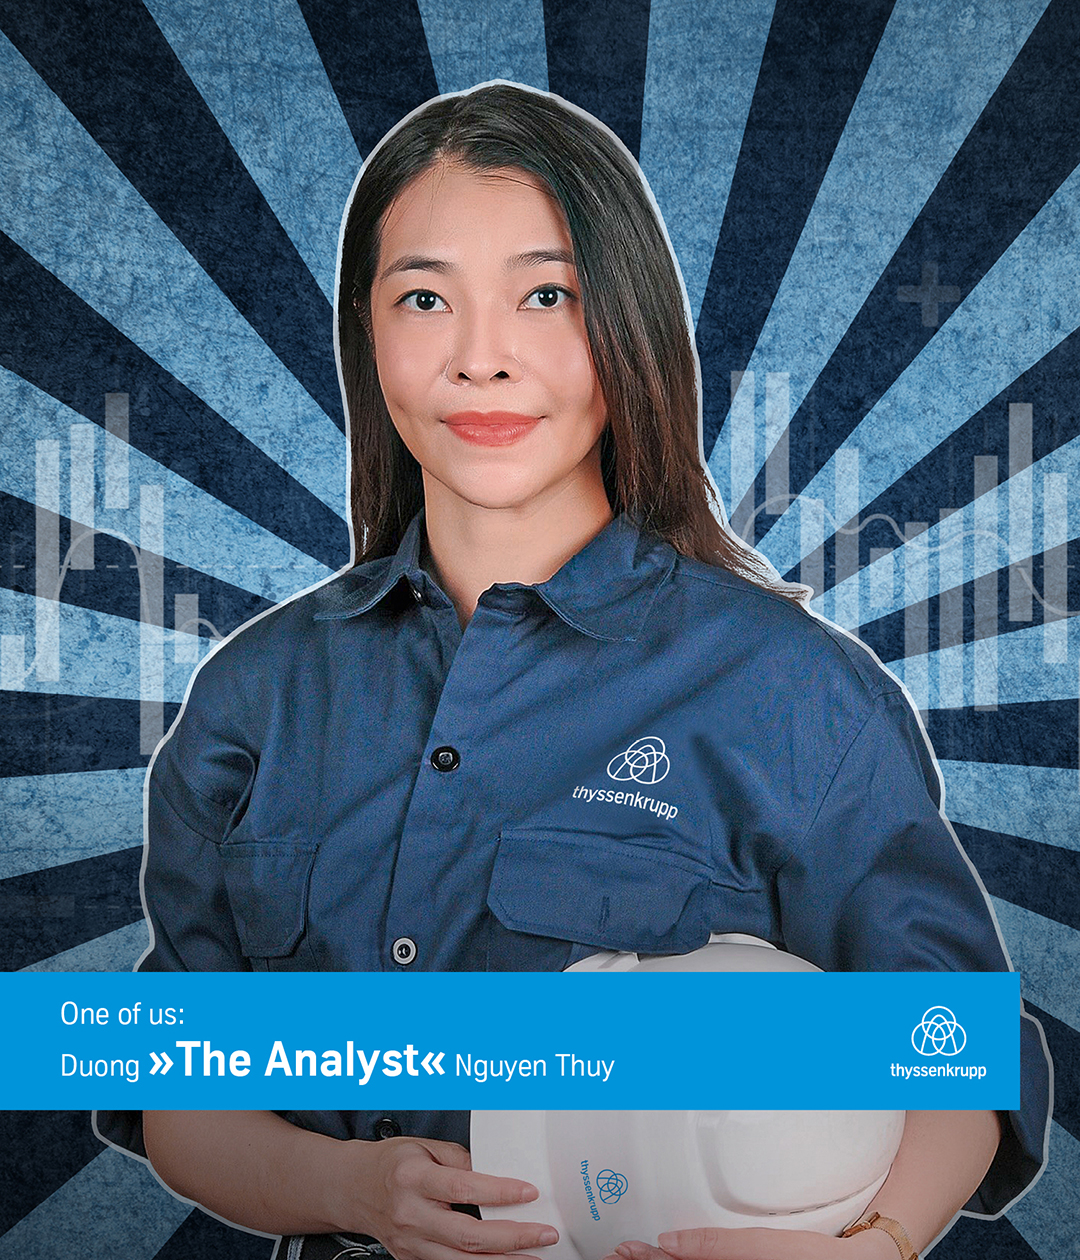 Duong >>The Analyst<< Nguyen Thuy >>Duong Nguyen Thuy<<